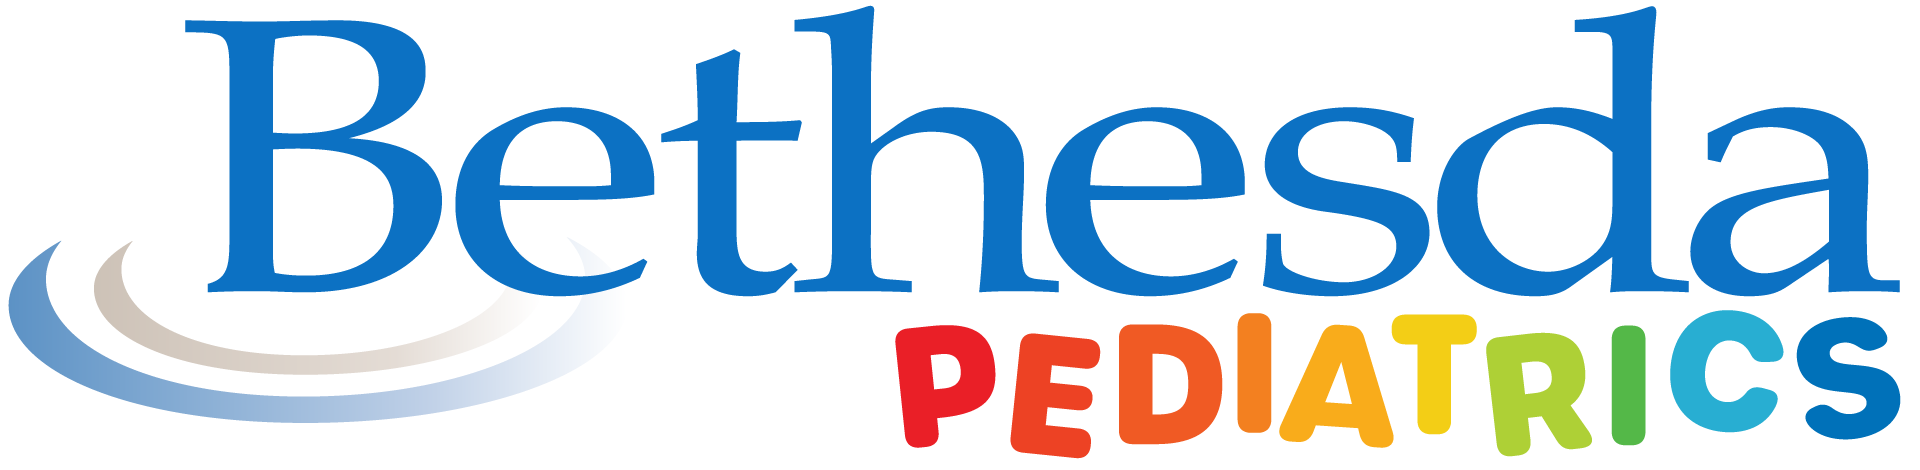 Bethesda Pediatrics logo